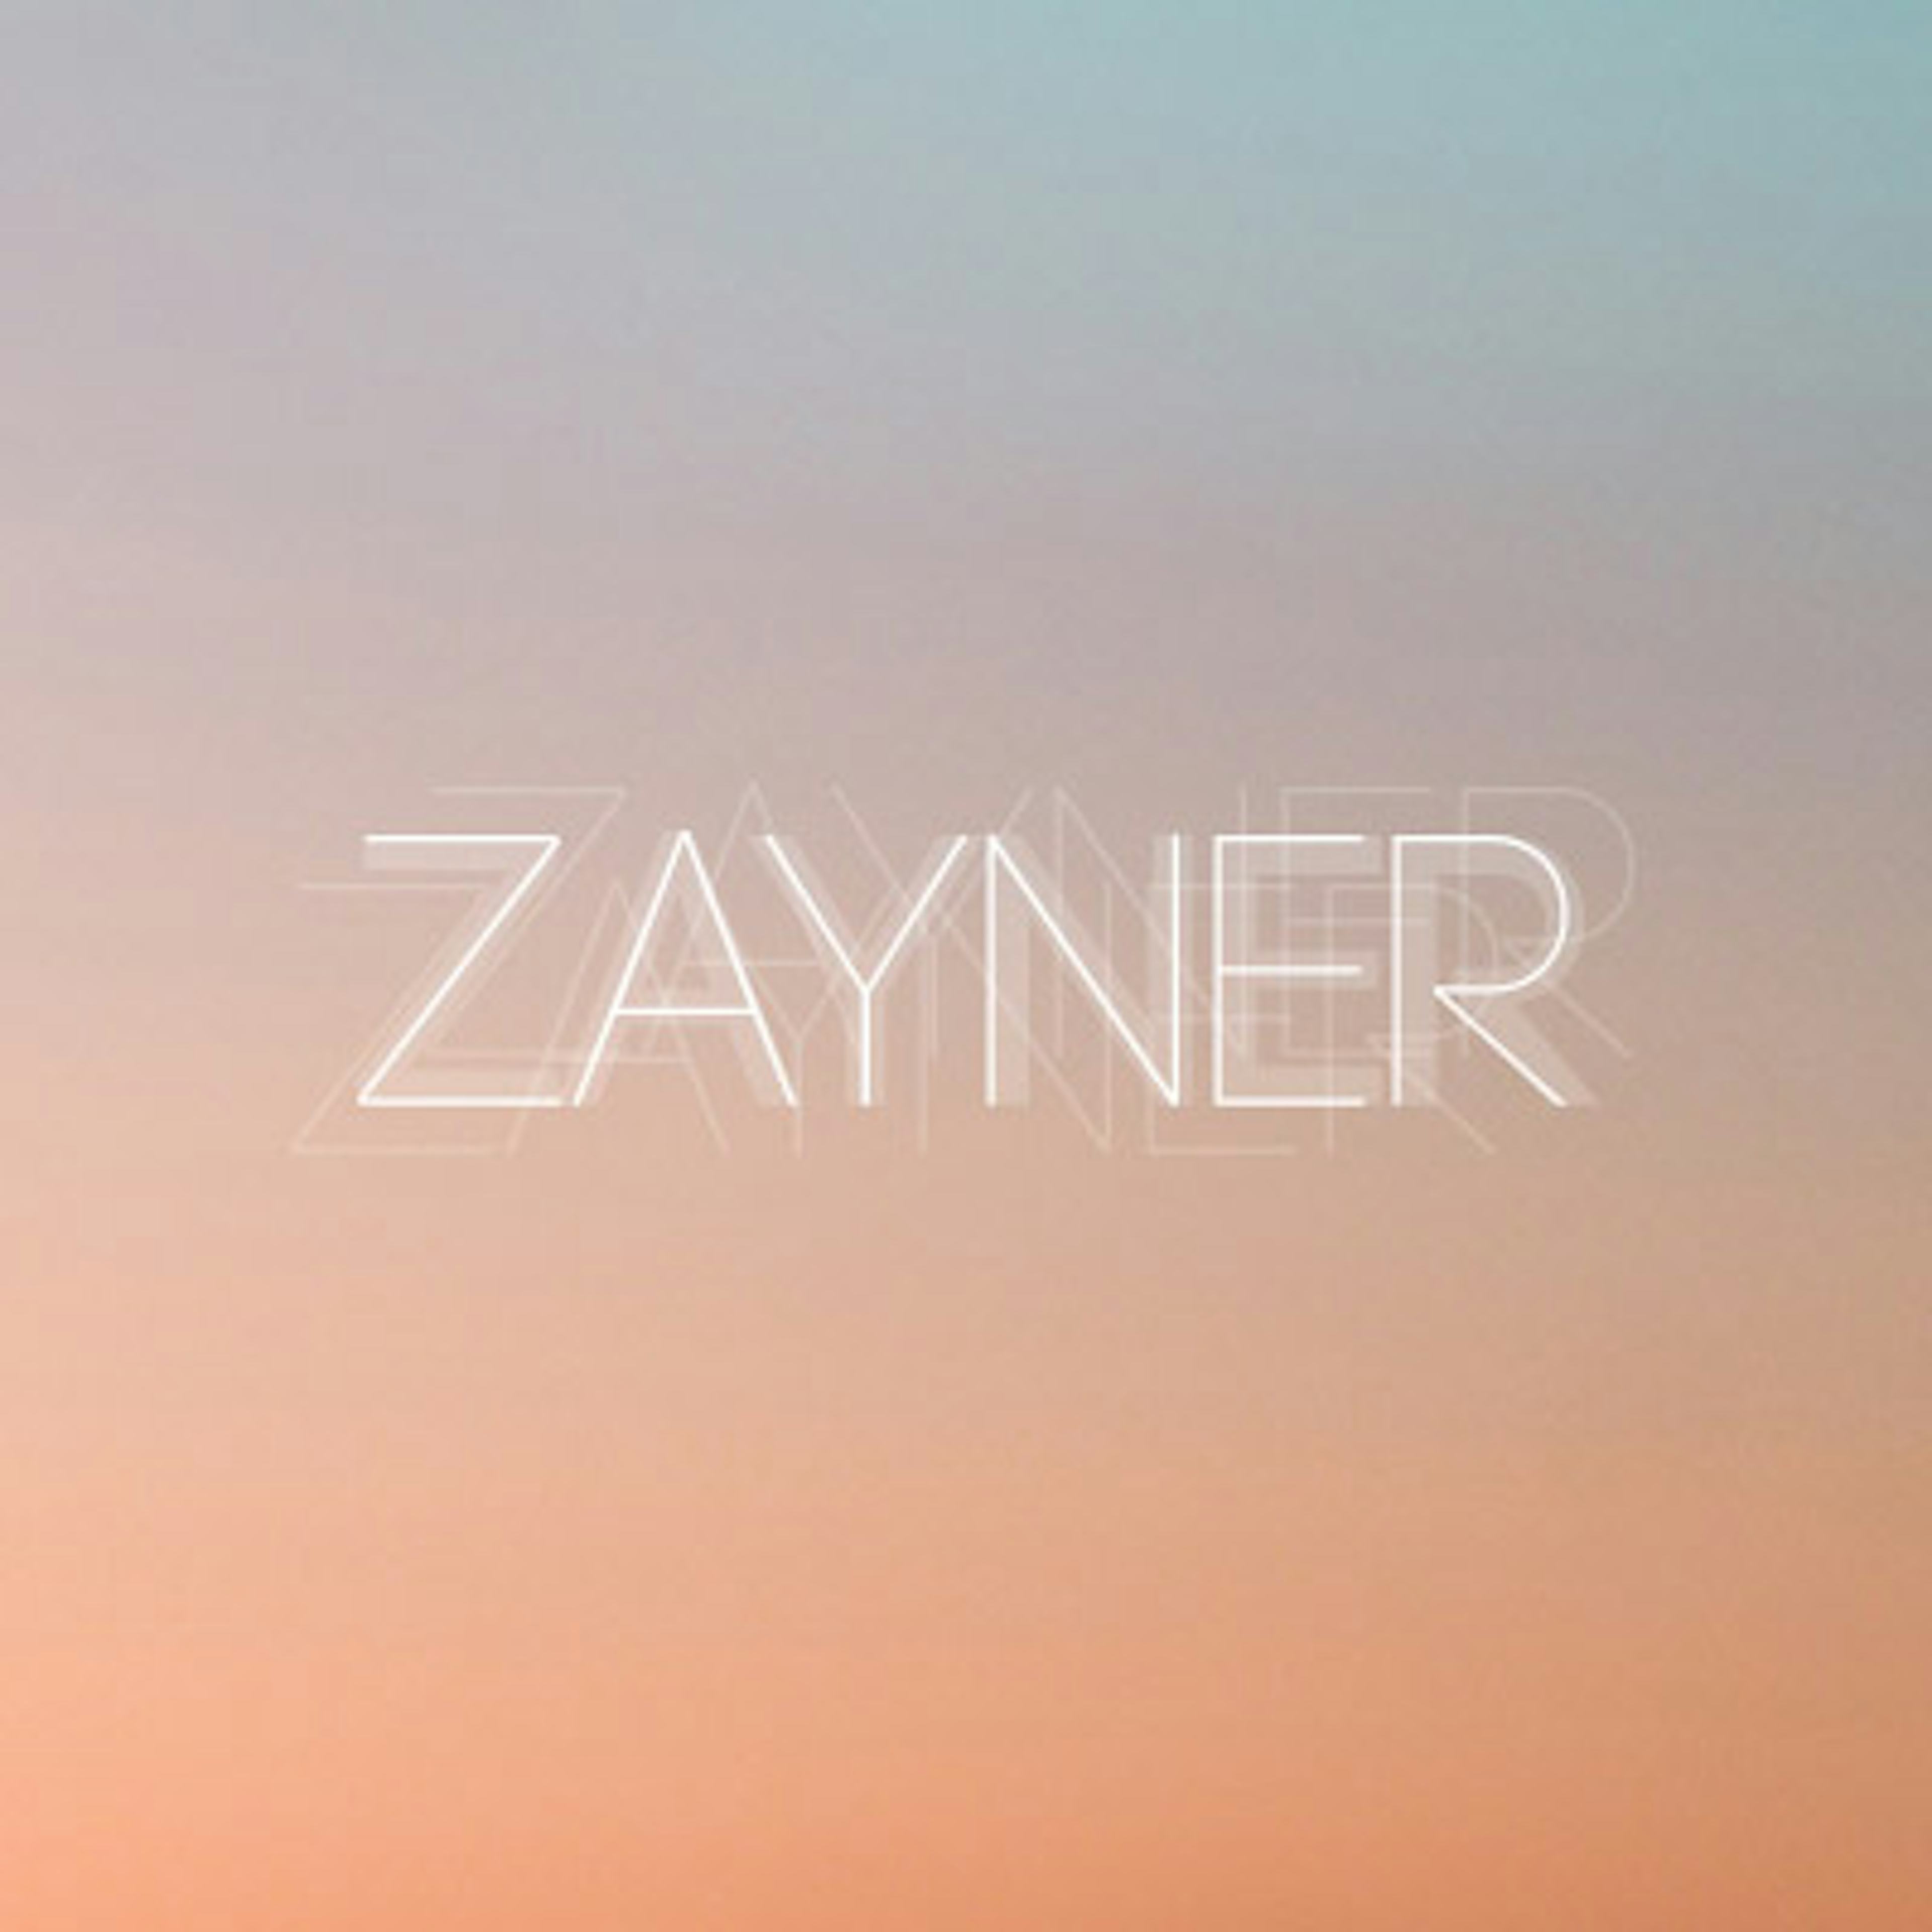 Zayner